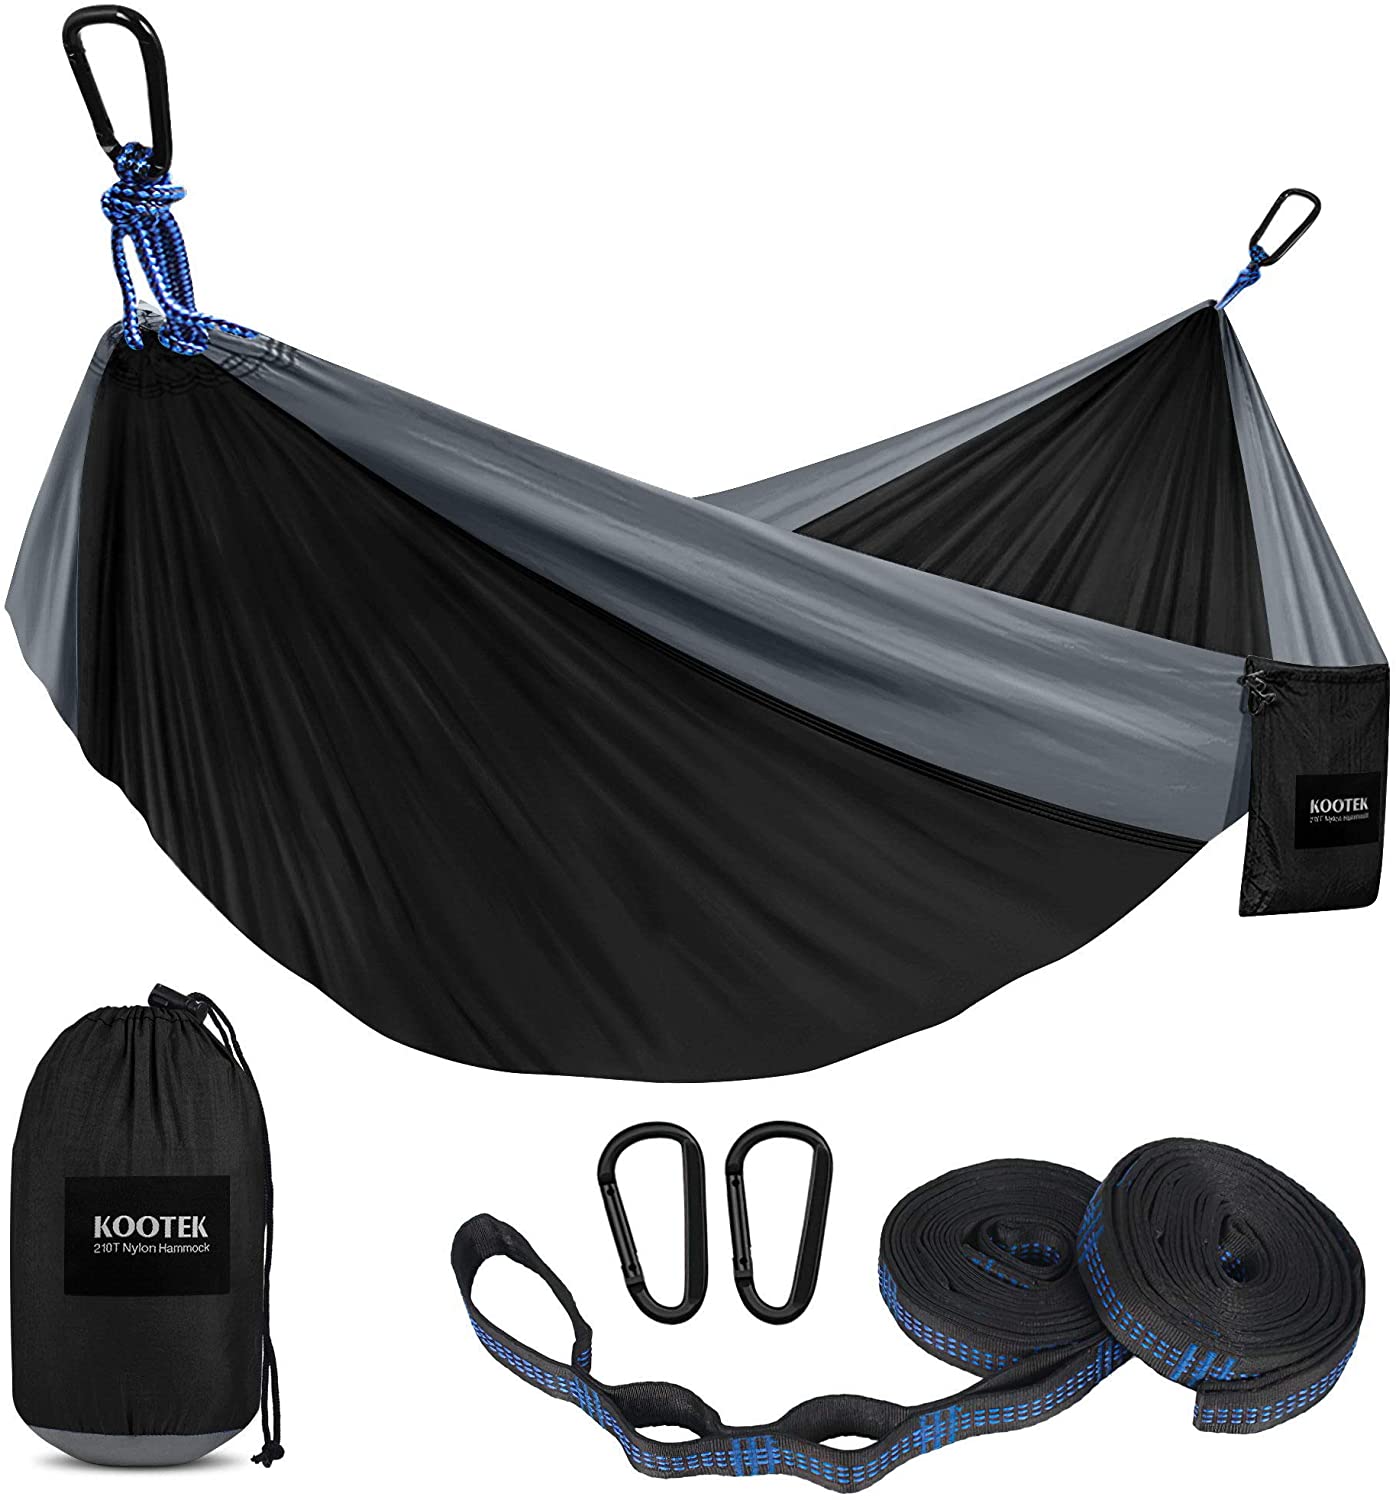 Camping Hammock Double & Single Portable Hammocks with 2 Tree Straps, Lightweight Nylon Parachute Hammocks for Backpacking, Travel, Beach, Backyard, Patio, Hiking